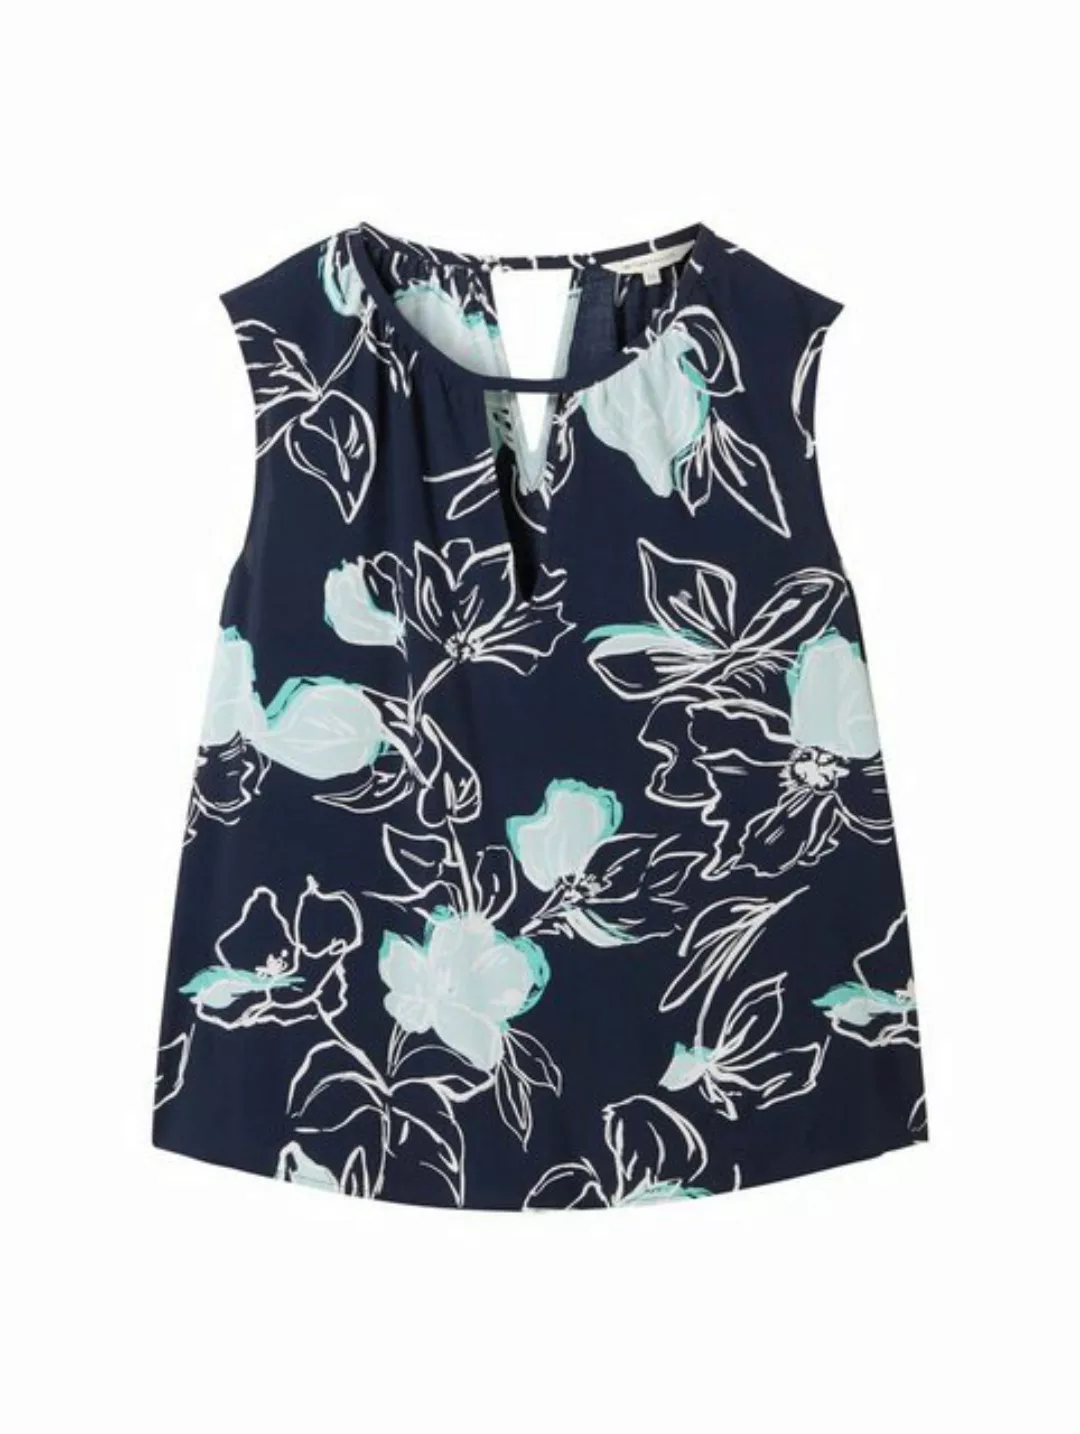 TOM TAILOR Blusenshirt feminine blouse top günstig online kaufen